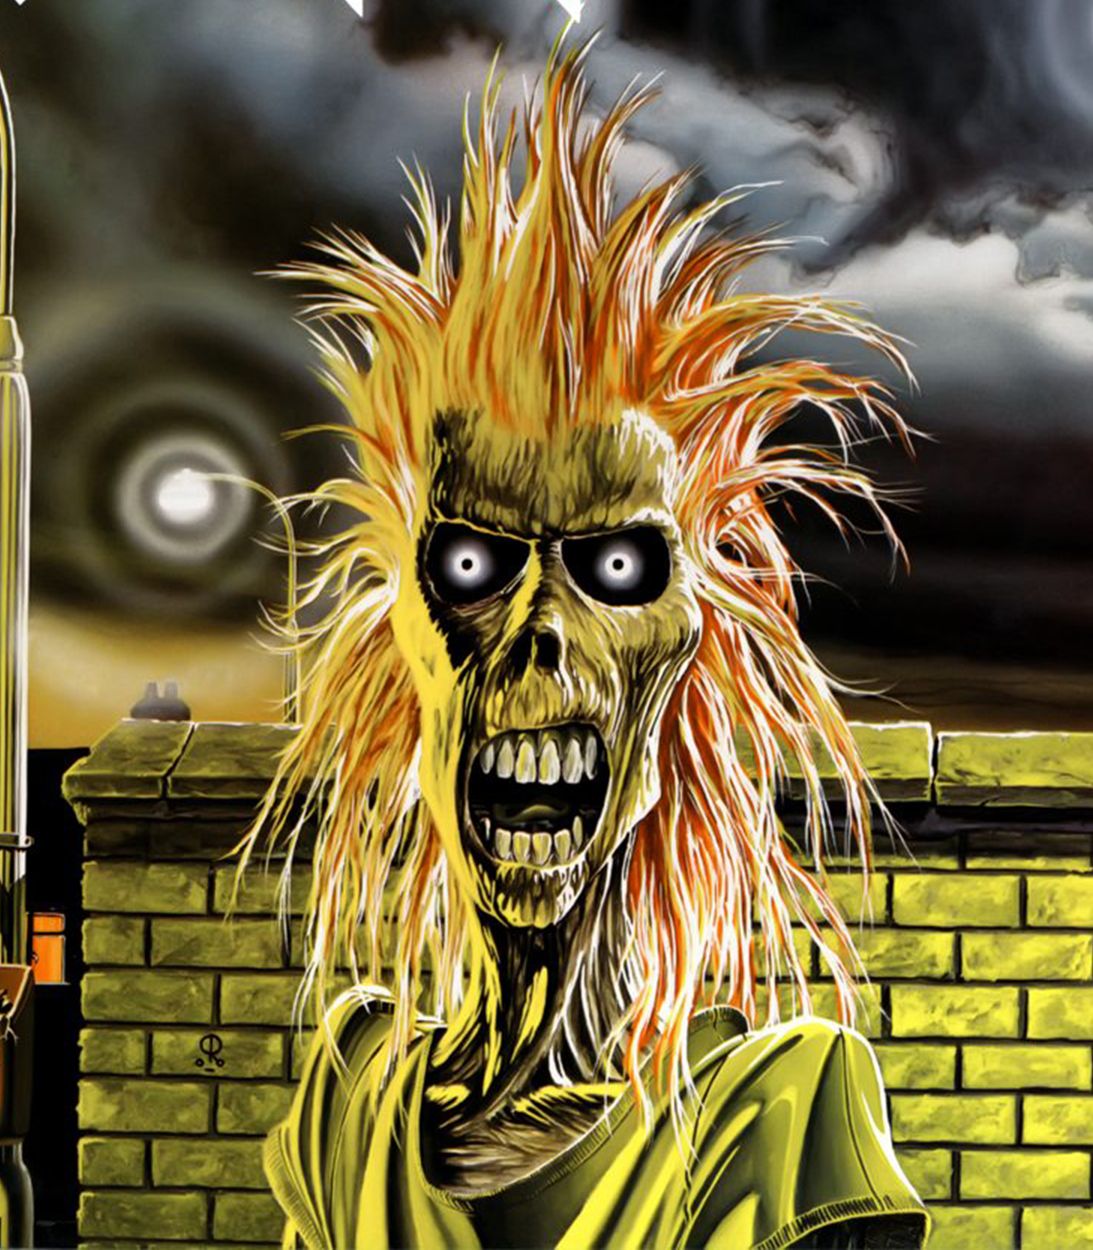 Iron Maiden Album Art - Vertical